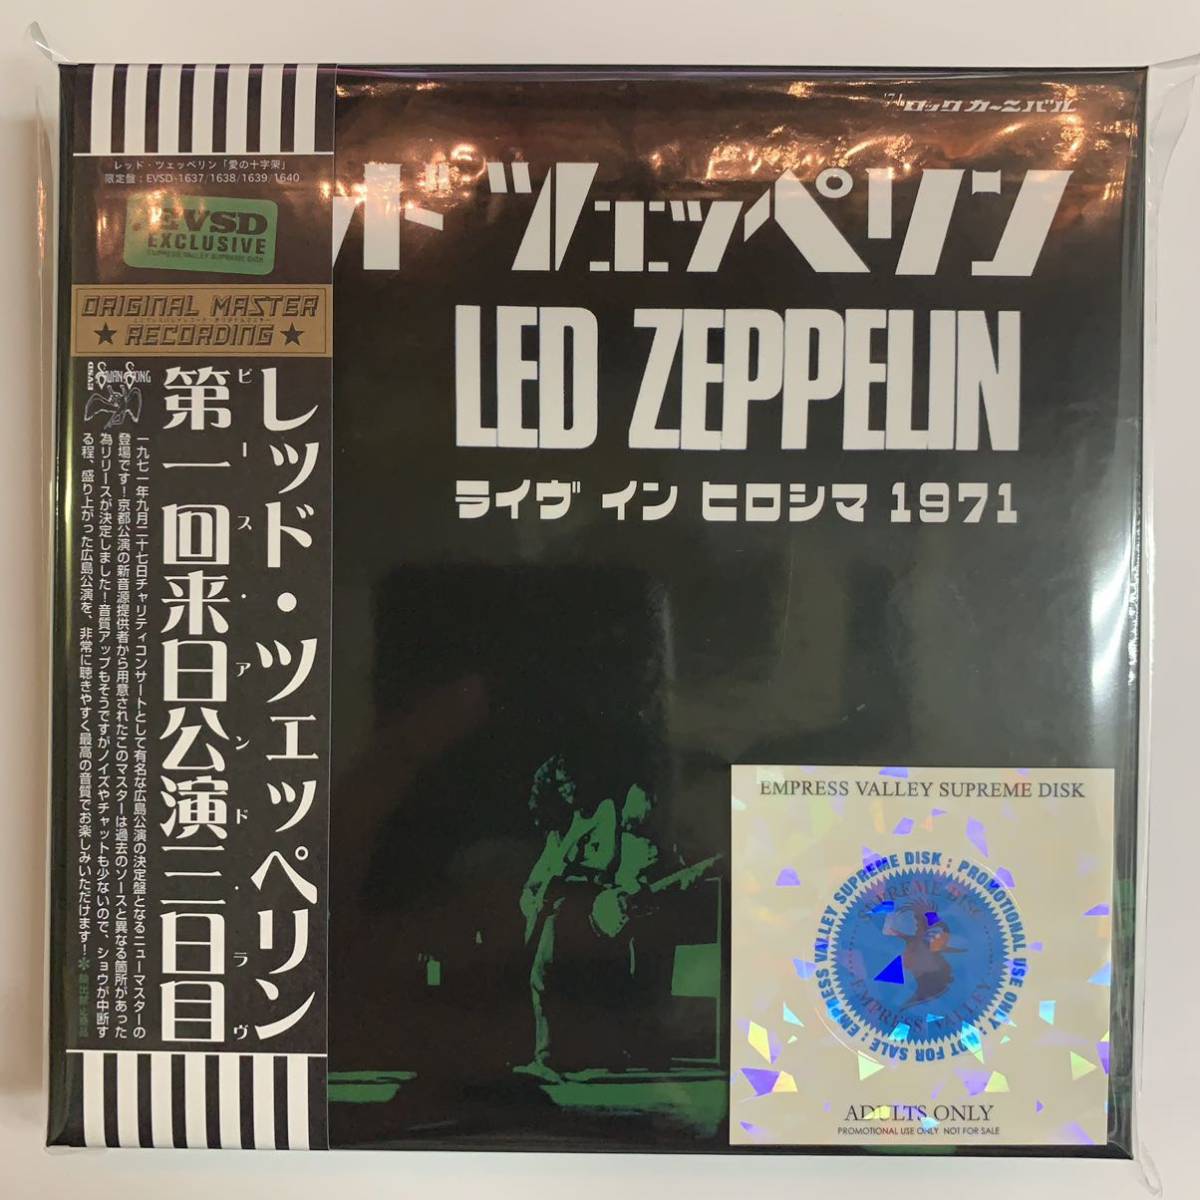 LED ZEPPELIN : PEACE AND LOVE 愛の十字架 6CD+DVD BOX 1971 広島公演